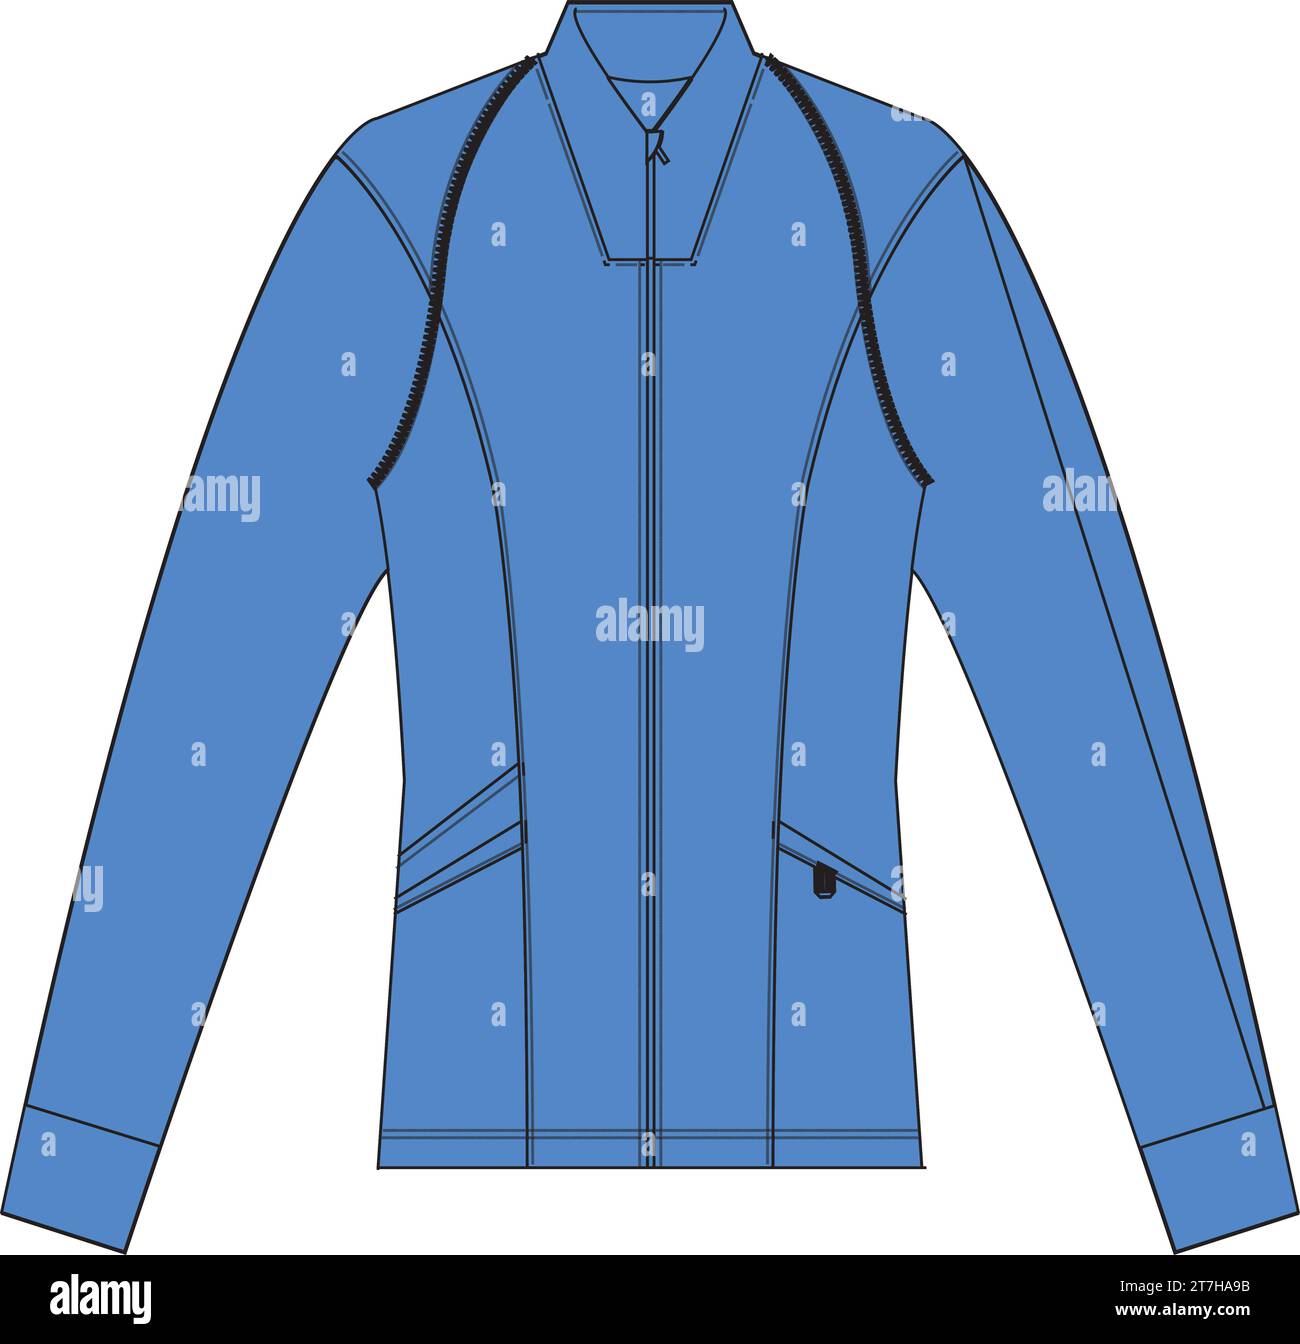 Medical Scrub Suit Design Template Stock Vector